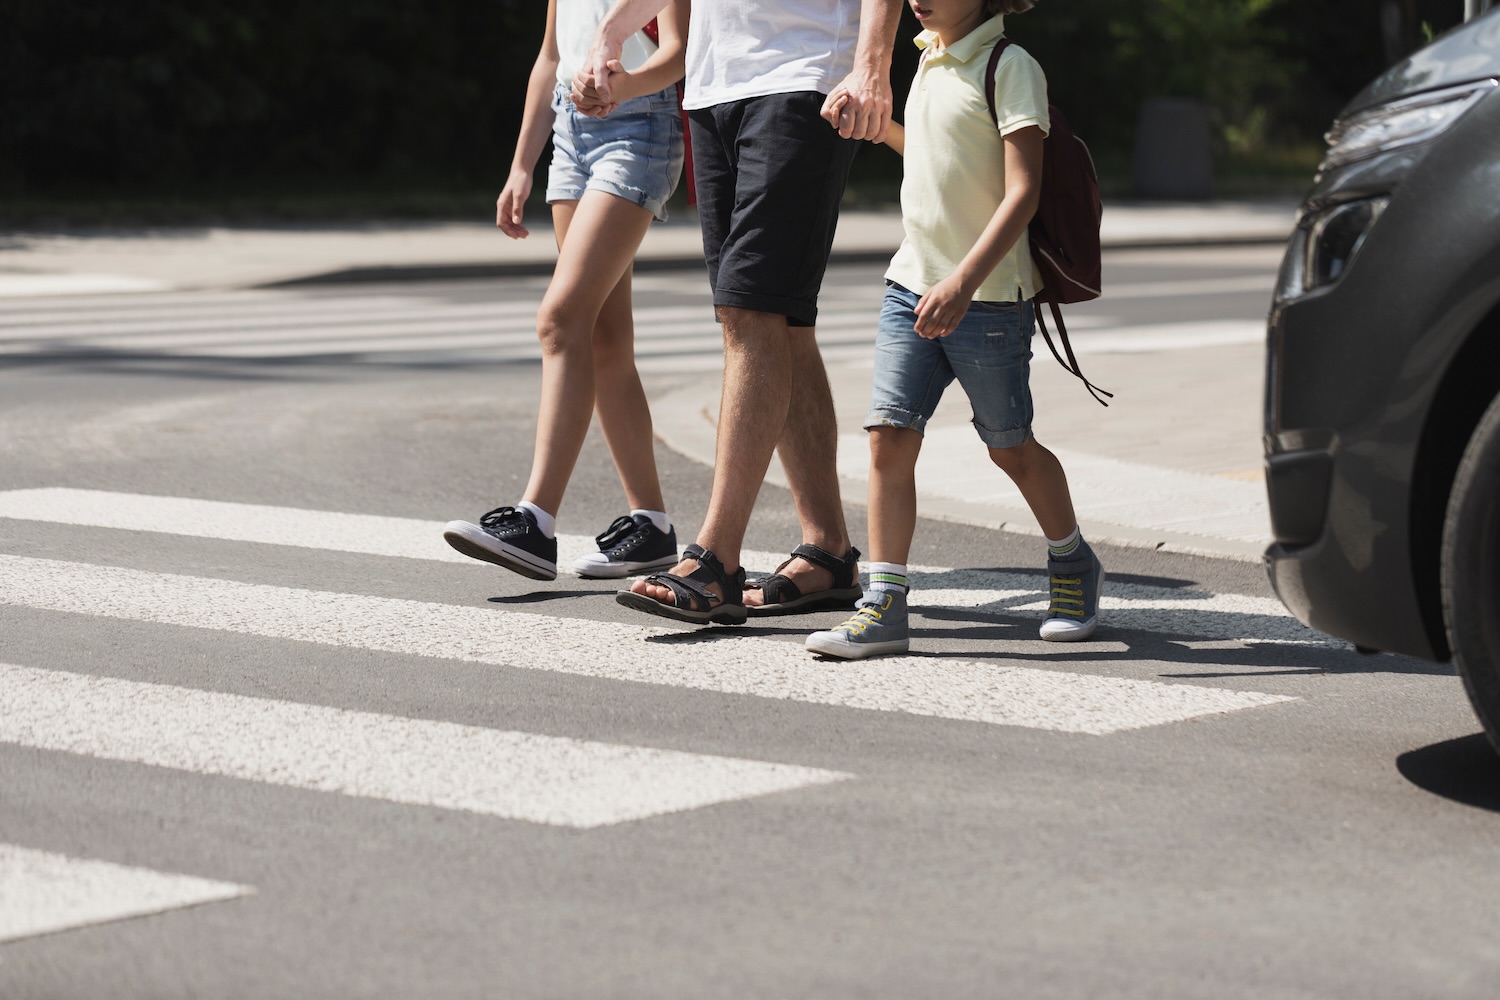 Pedestrian Awareness Month: Promoting Safe Driving Practices